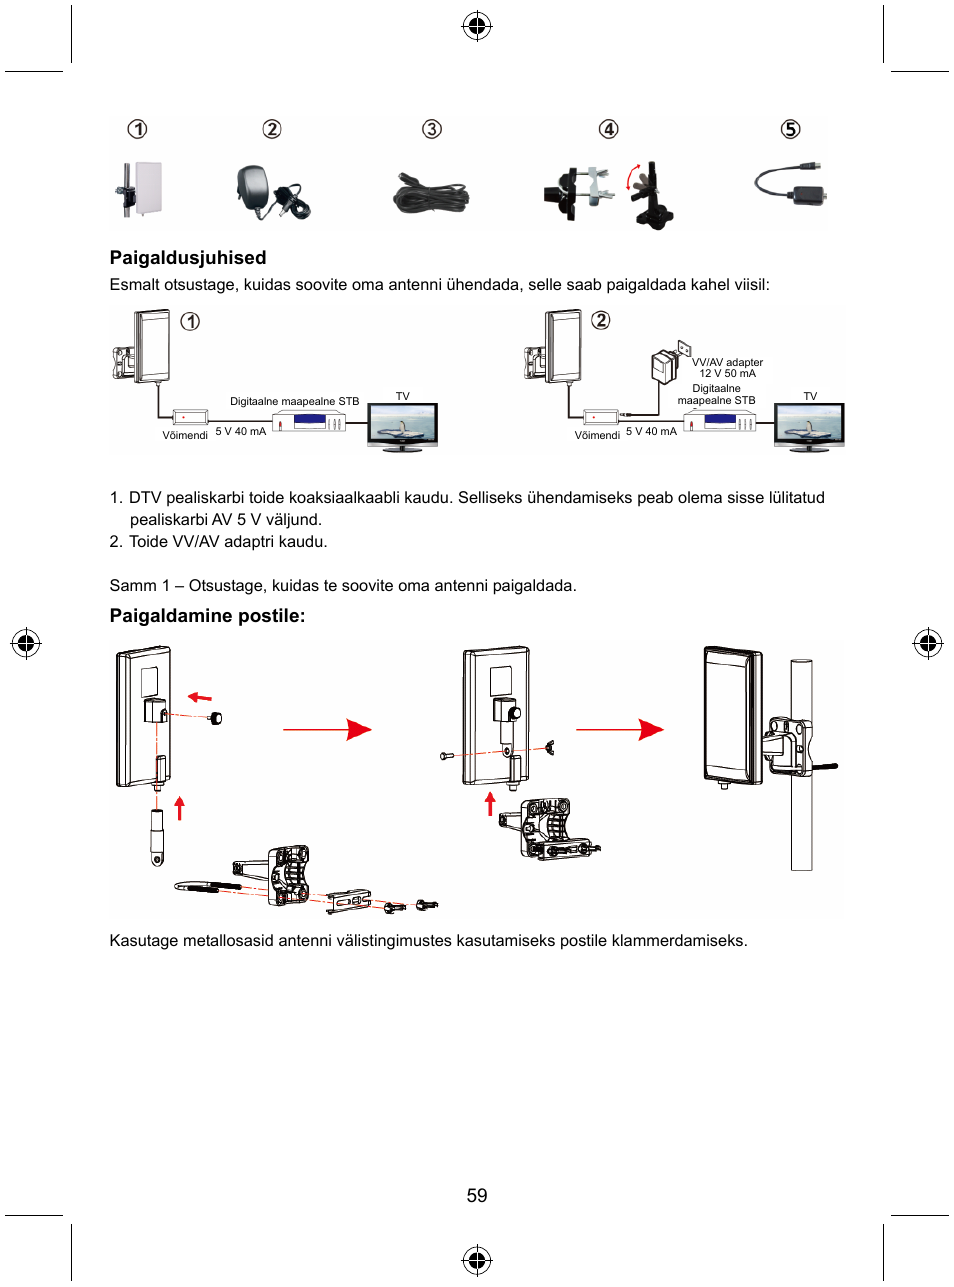 Paigaldusjuhised, Paigaldamine postile | Konig Electronic Universal DVB-T  antenna for indoor and outdoor use 28dB UHF User Manual | Page 59 / 71 |  Original mode